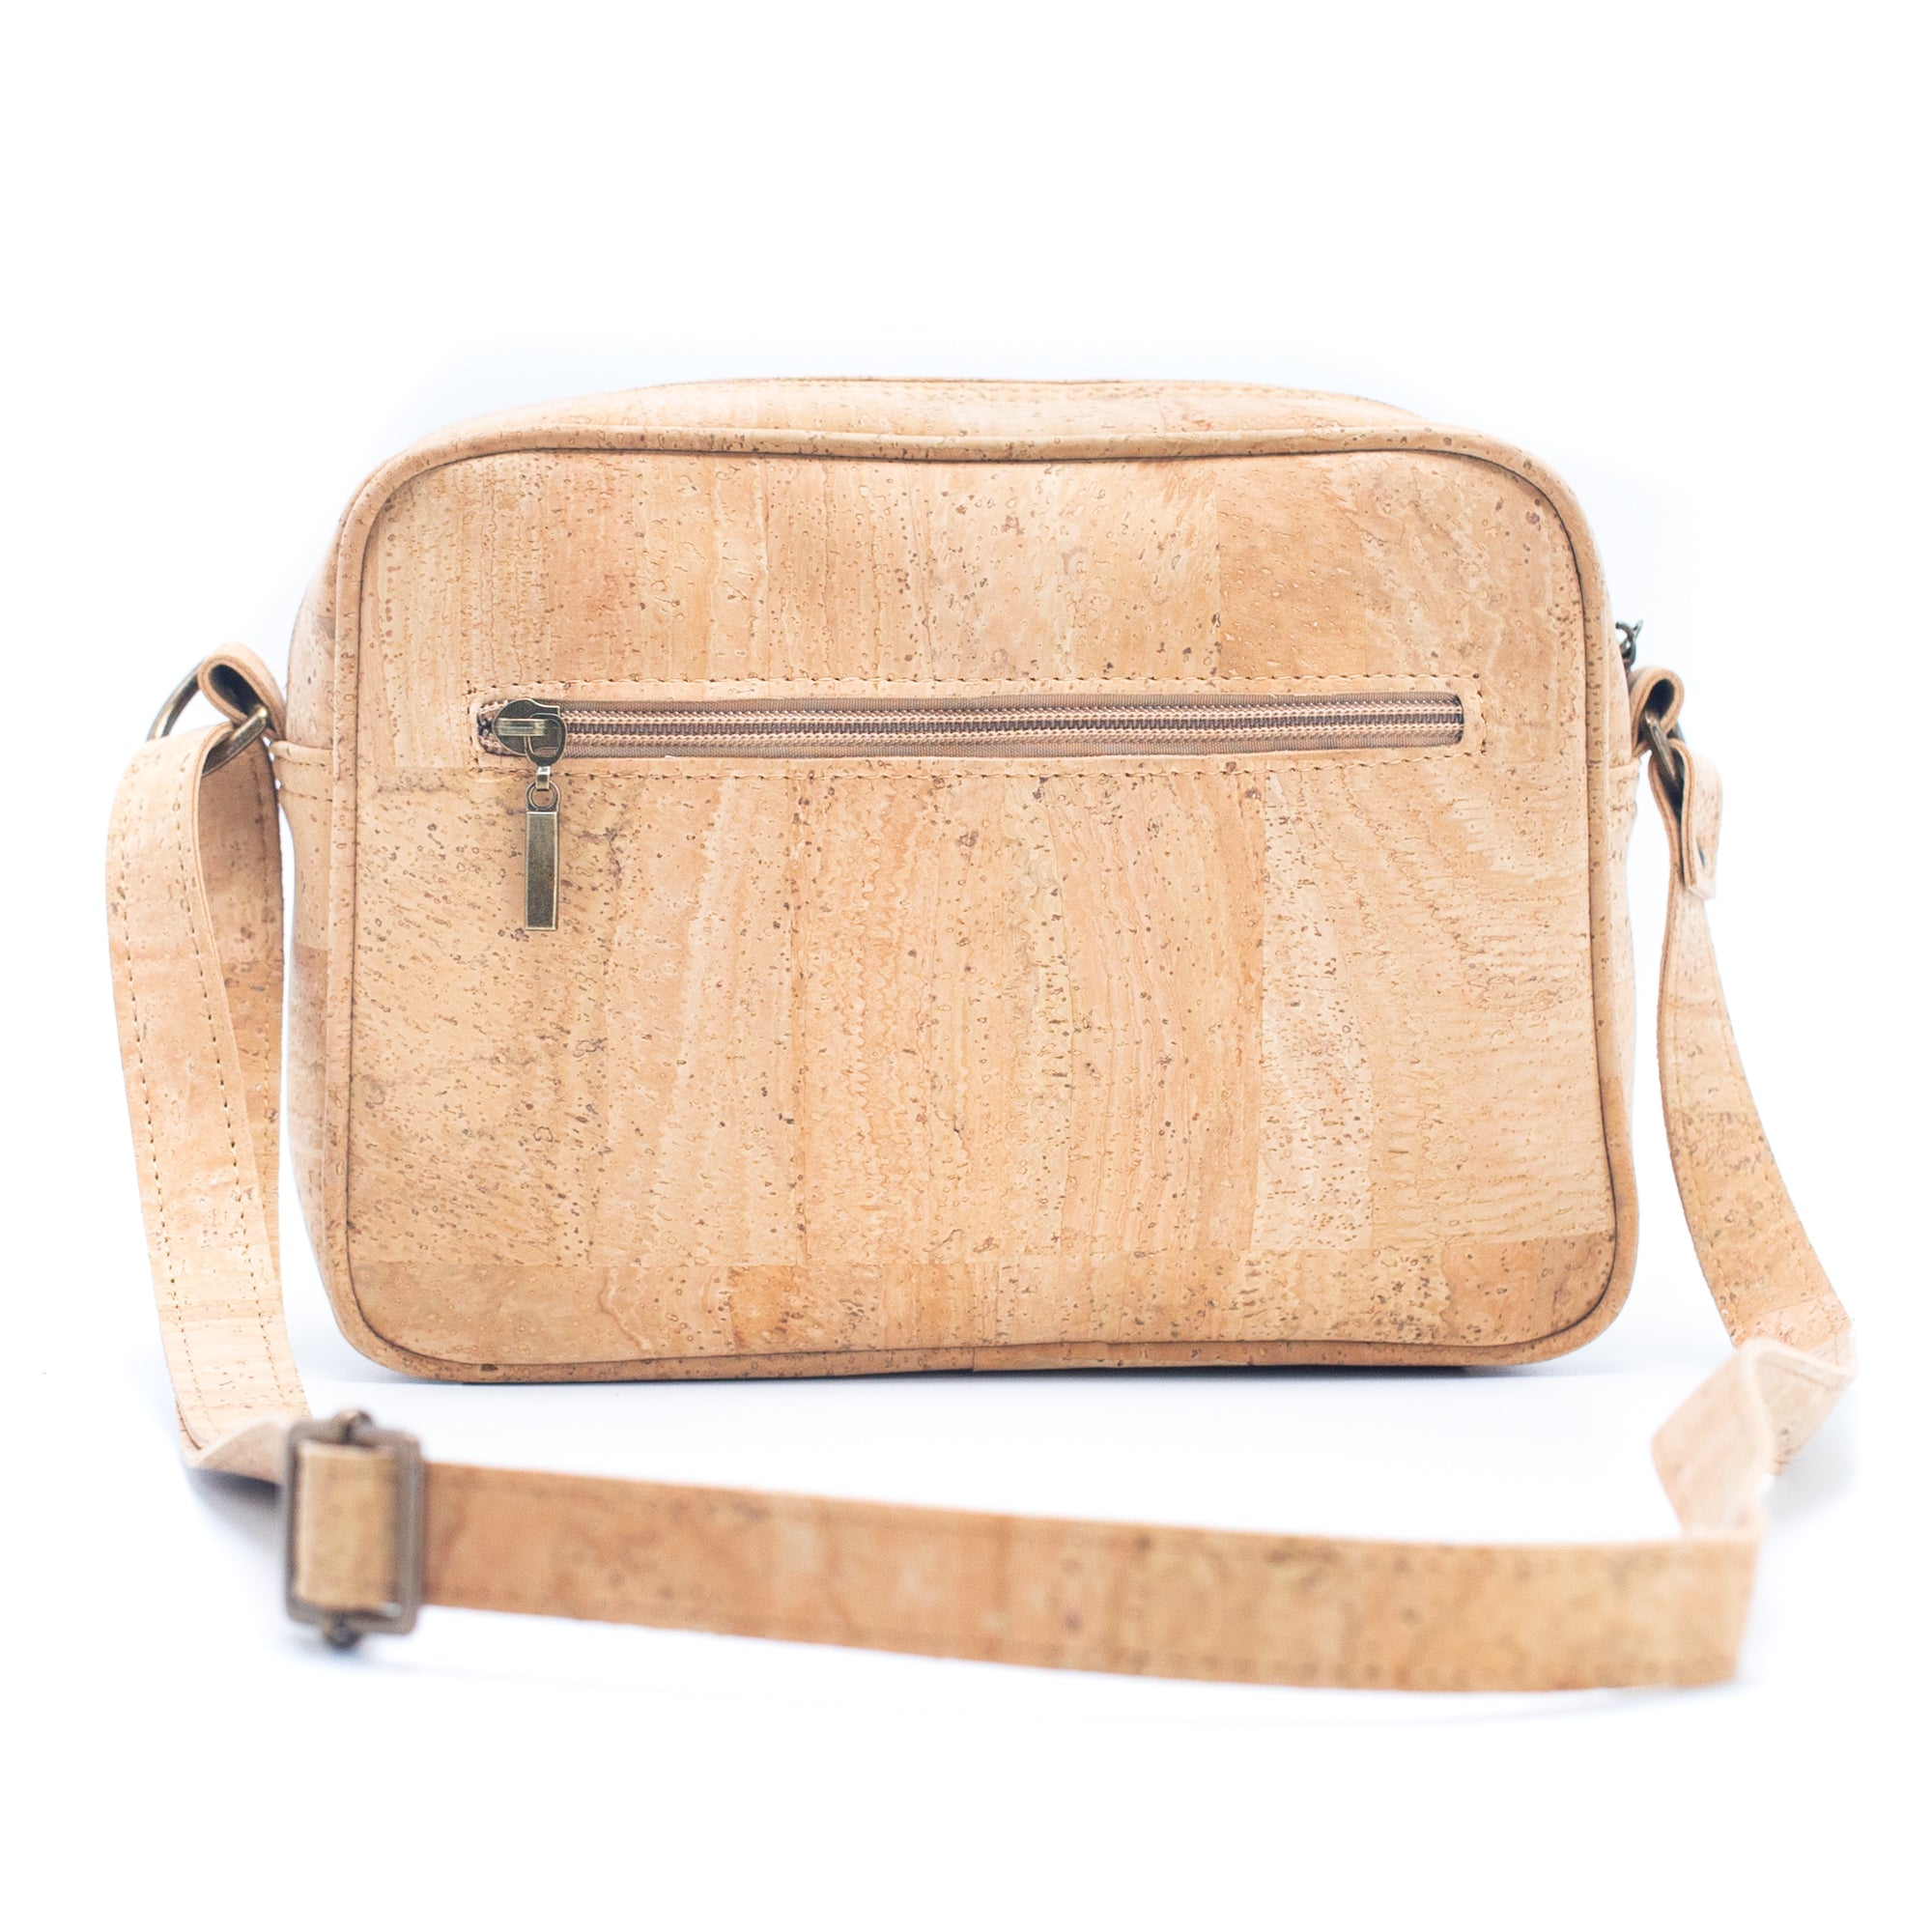 Buy Cork Handbag adora cork Handbag vegan sustainable body Bag nature  shoulder Bag Online in India - Etsy